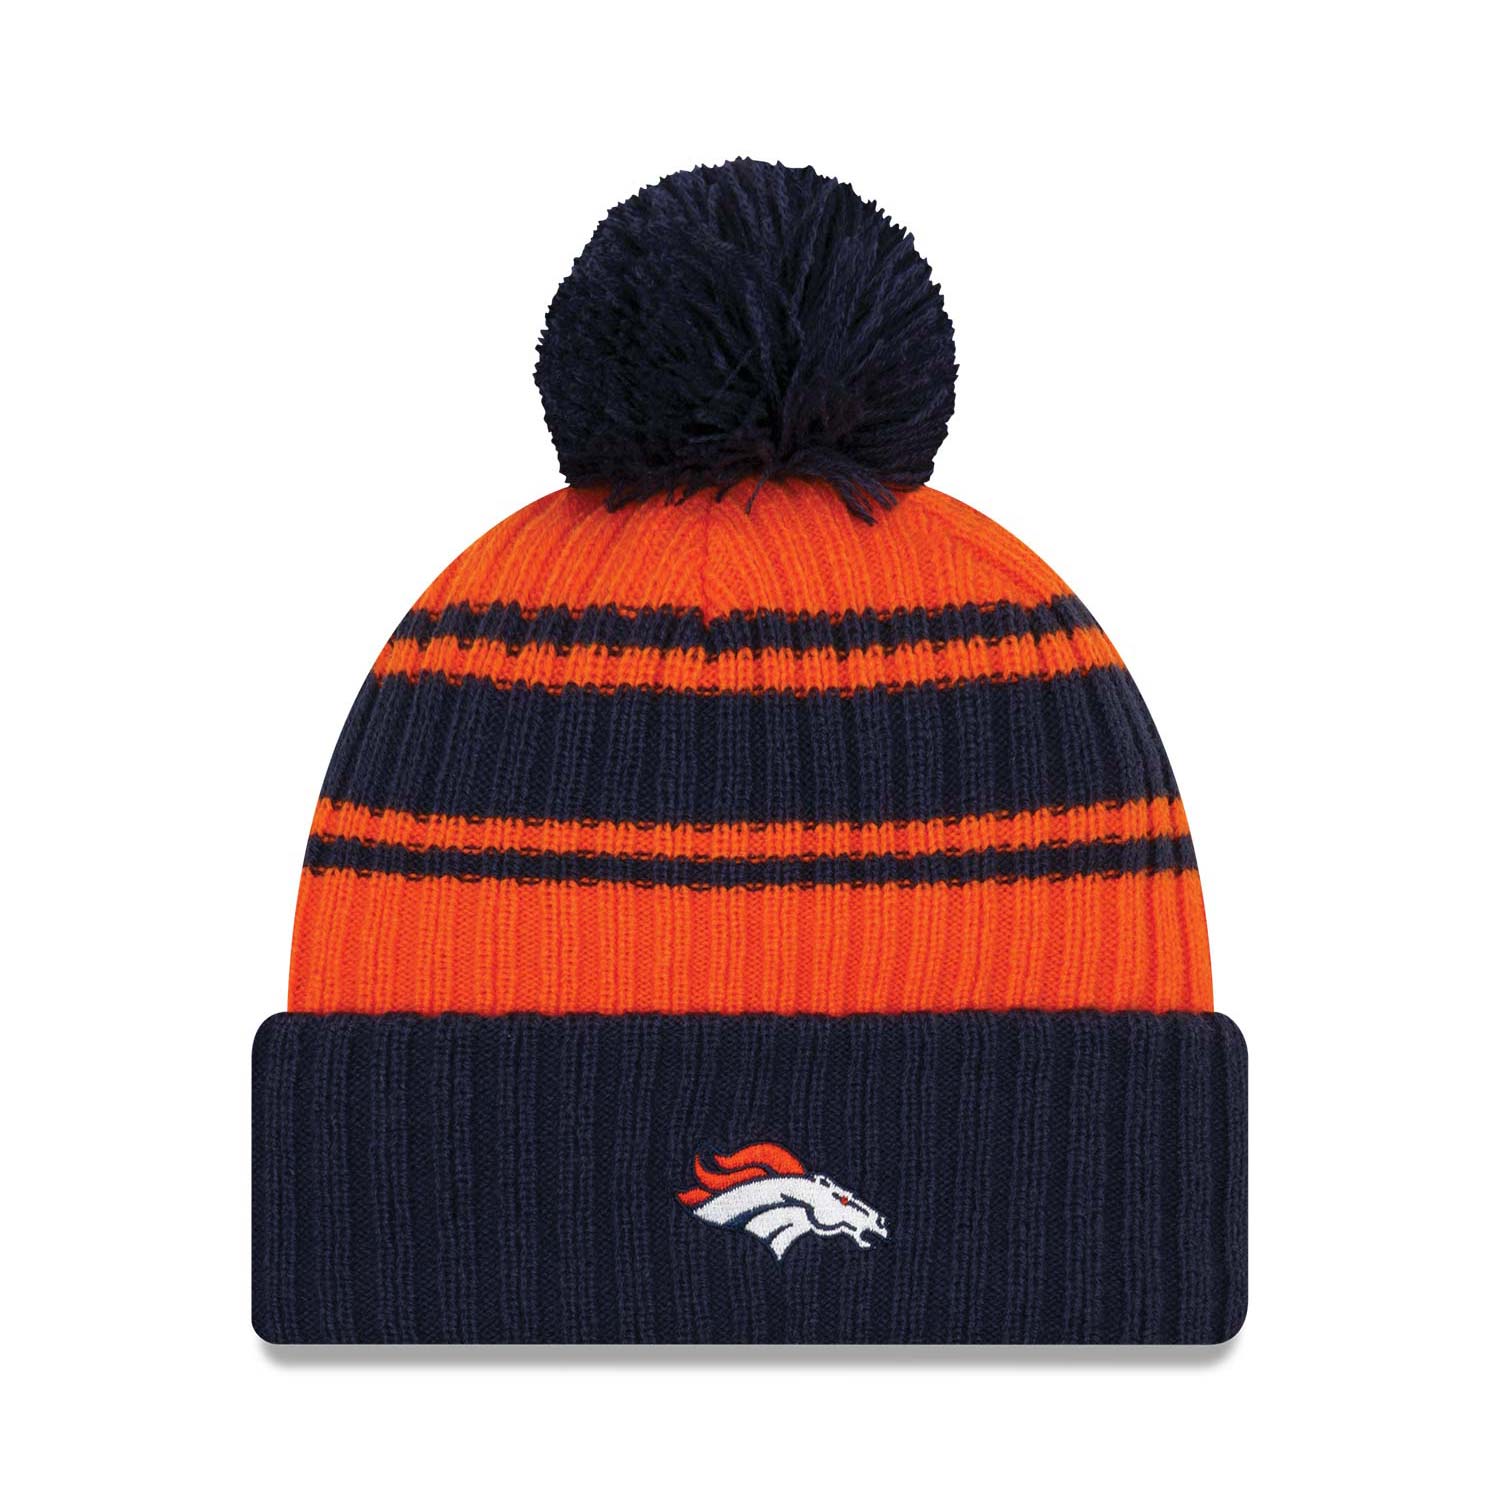 Denver Broncos NFL Sideline Orange Beanie Hat